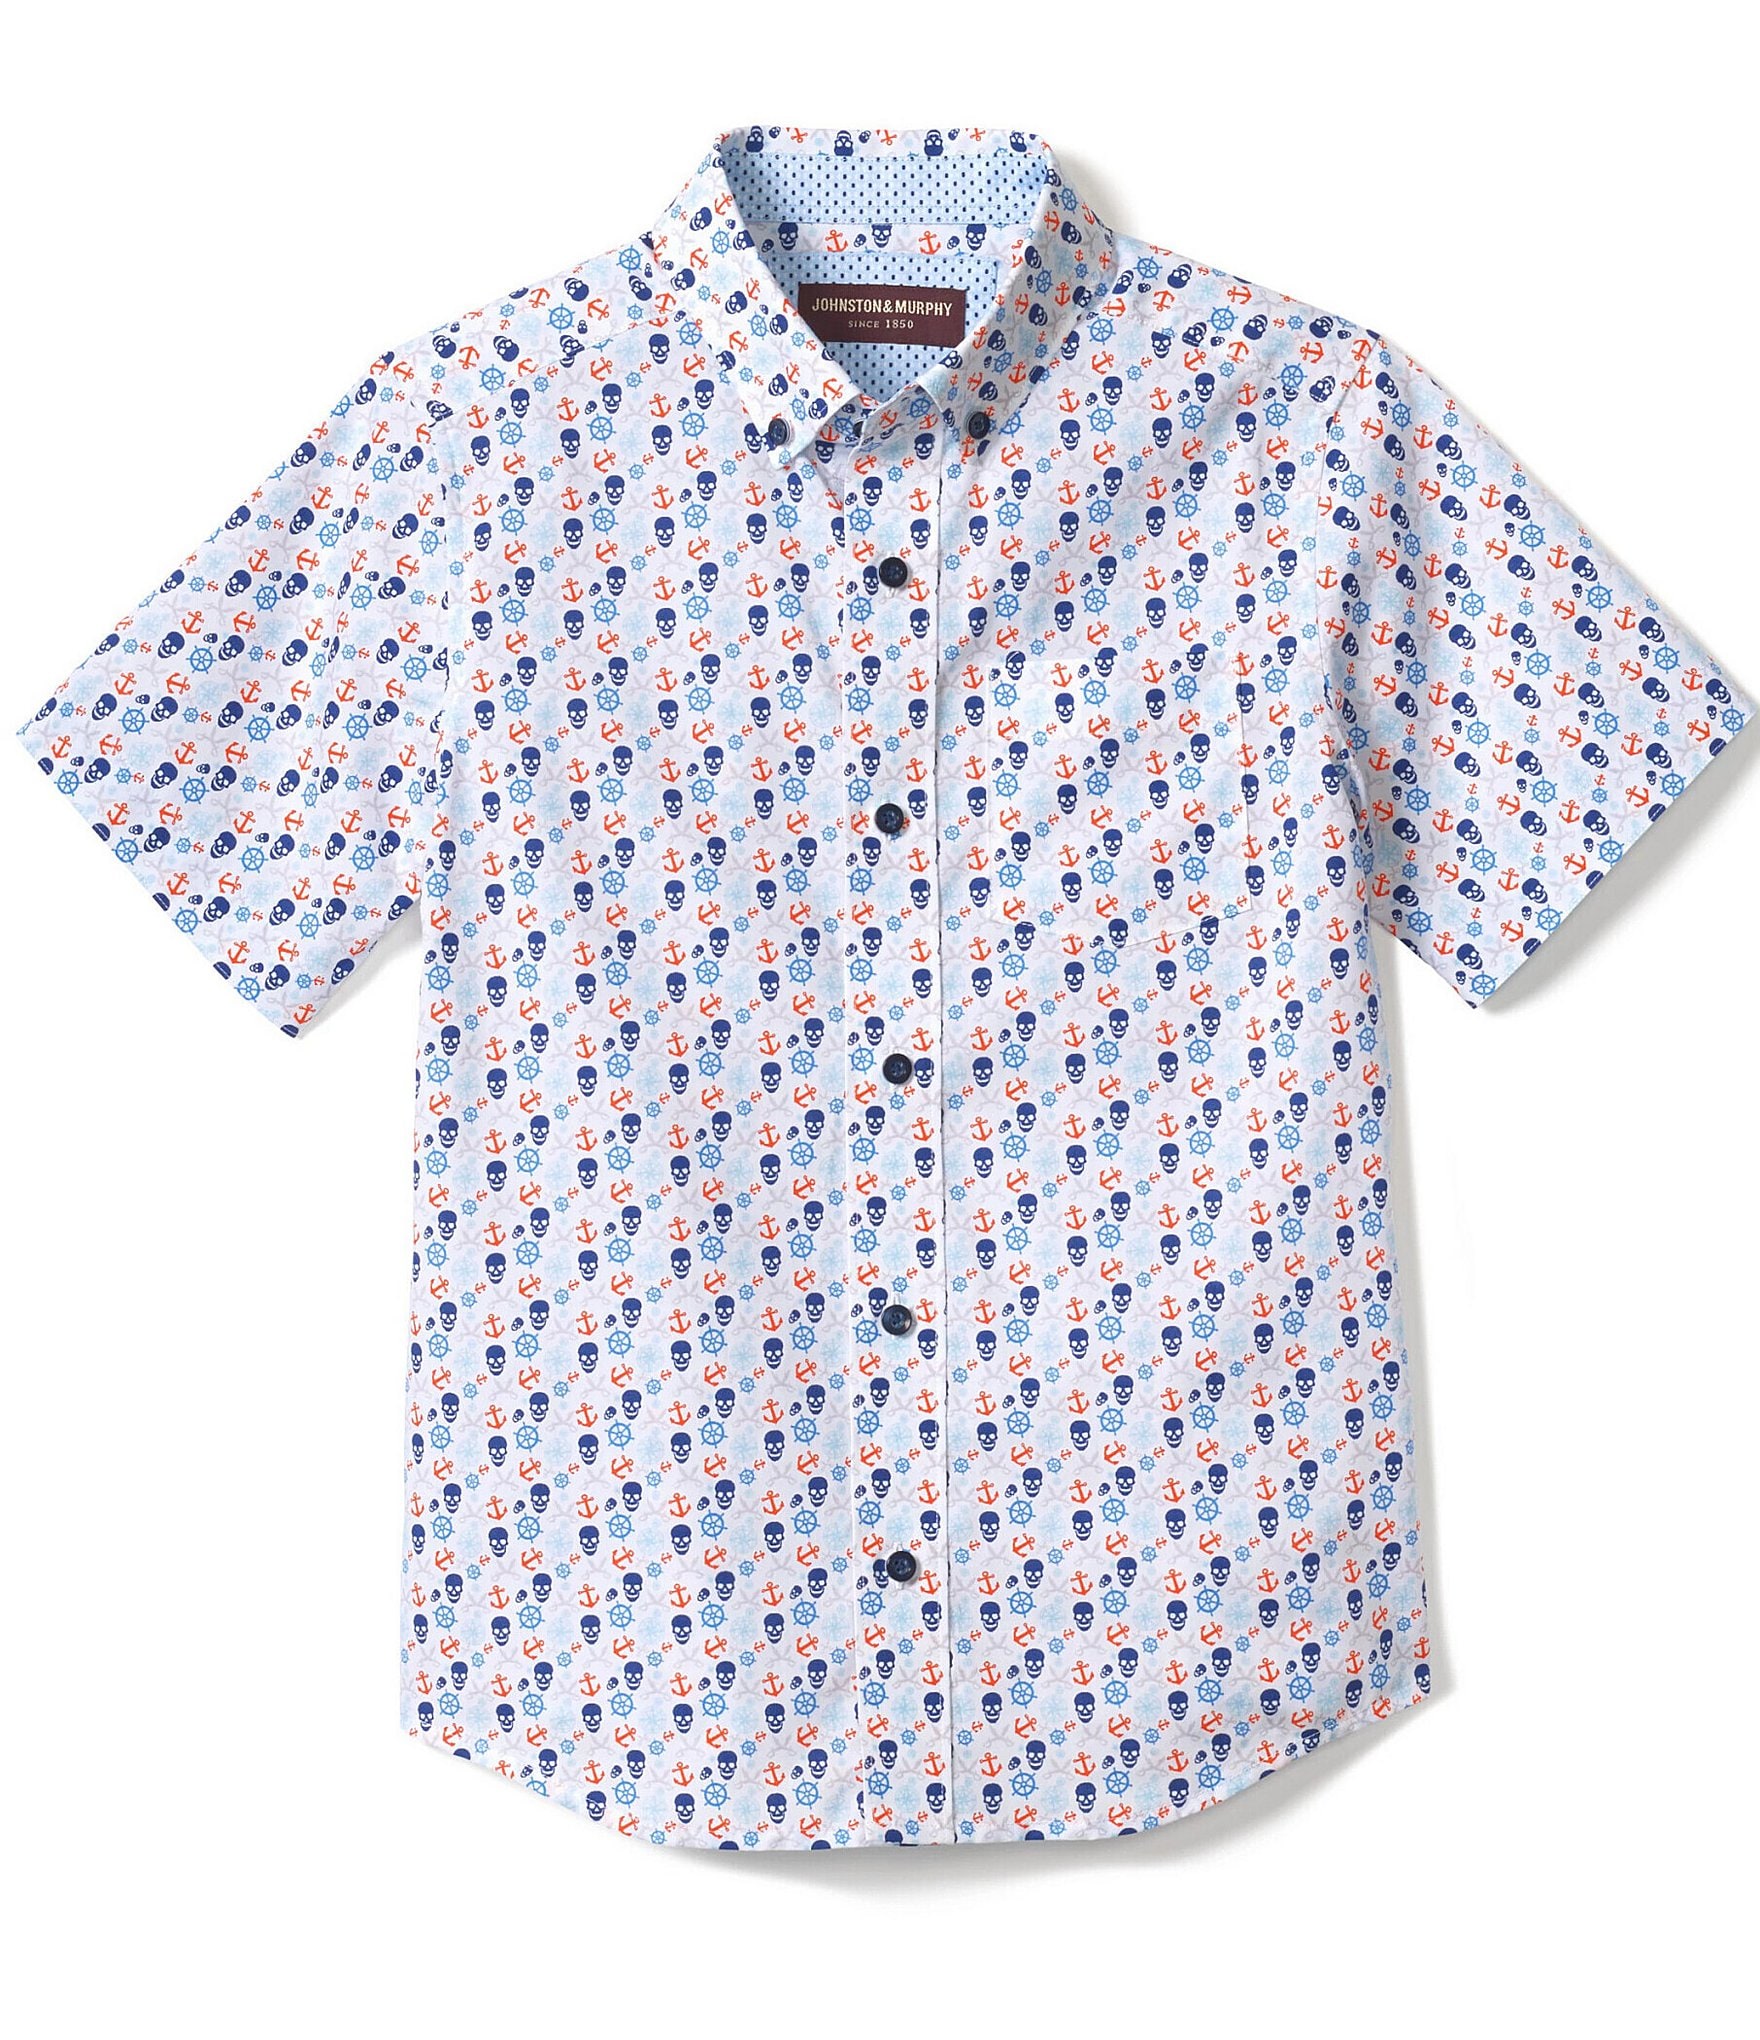 Johnston Murphy LittleBoys 4-16 Short Sleeve Pirate Print Shirt - M